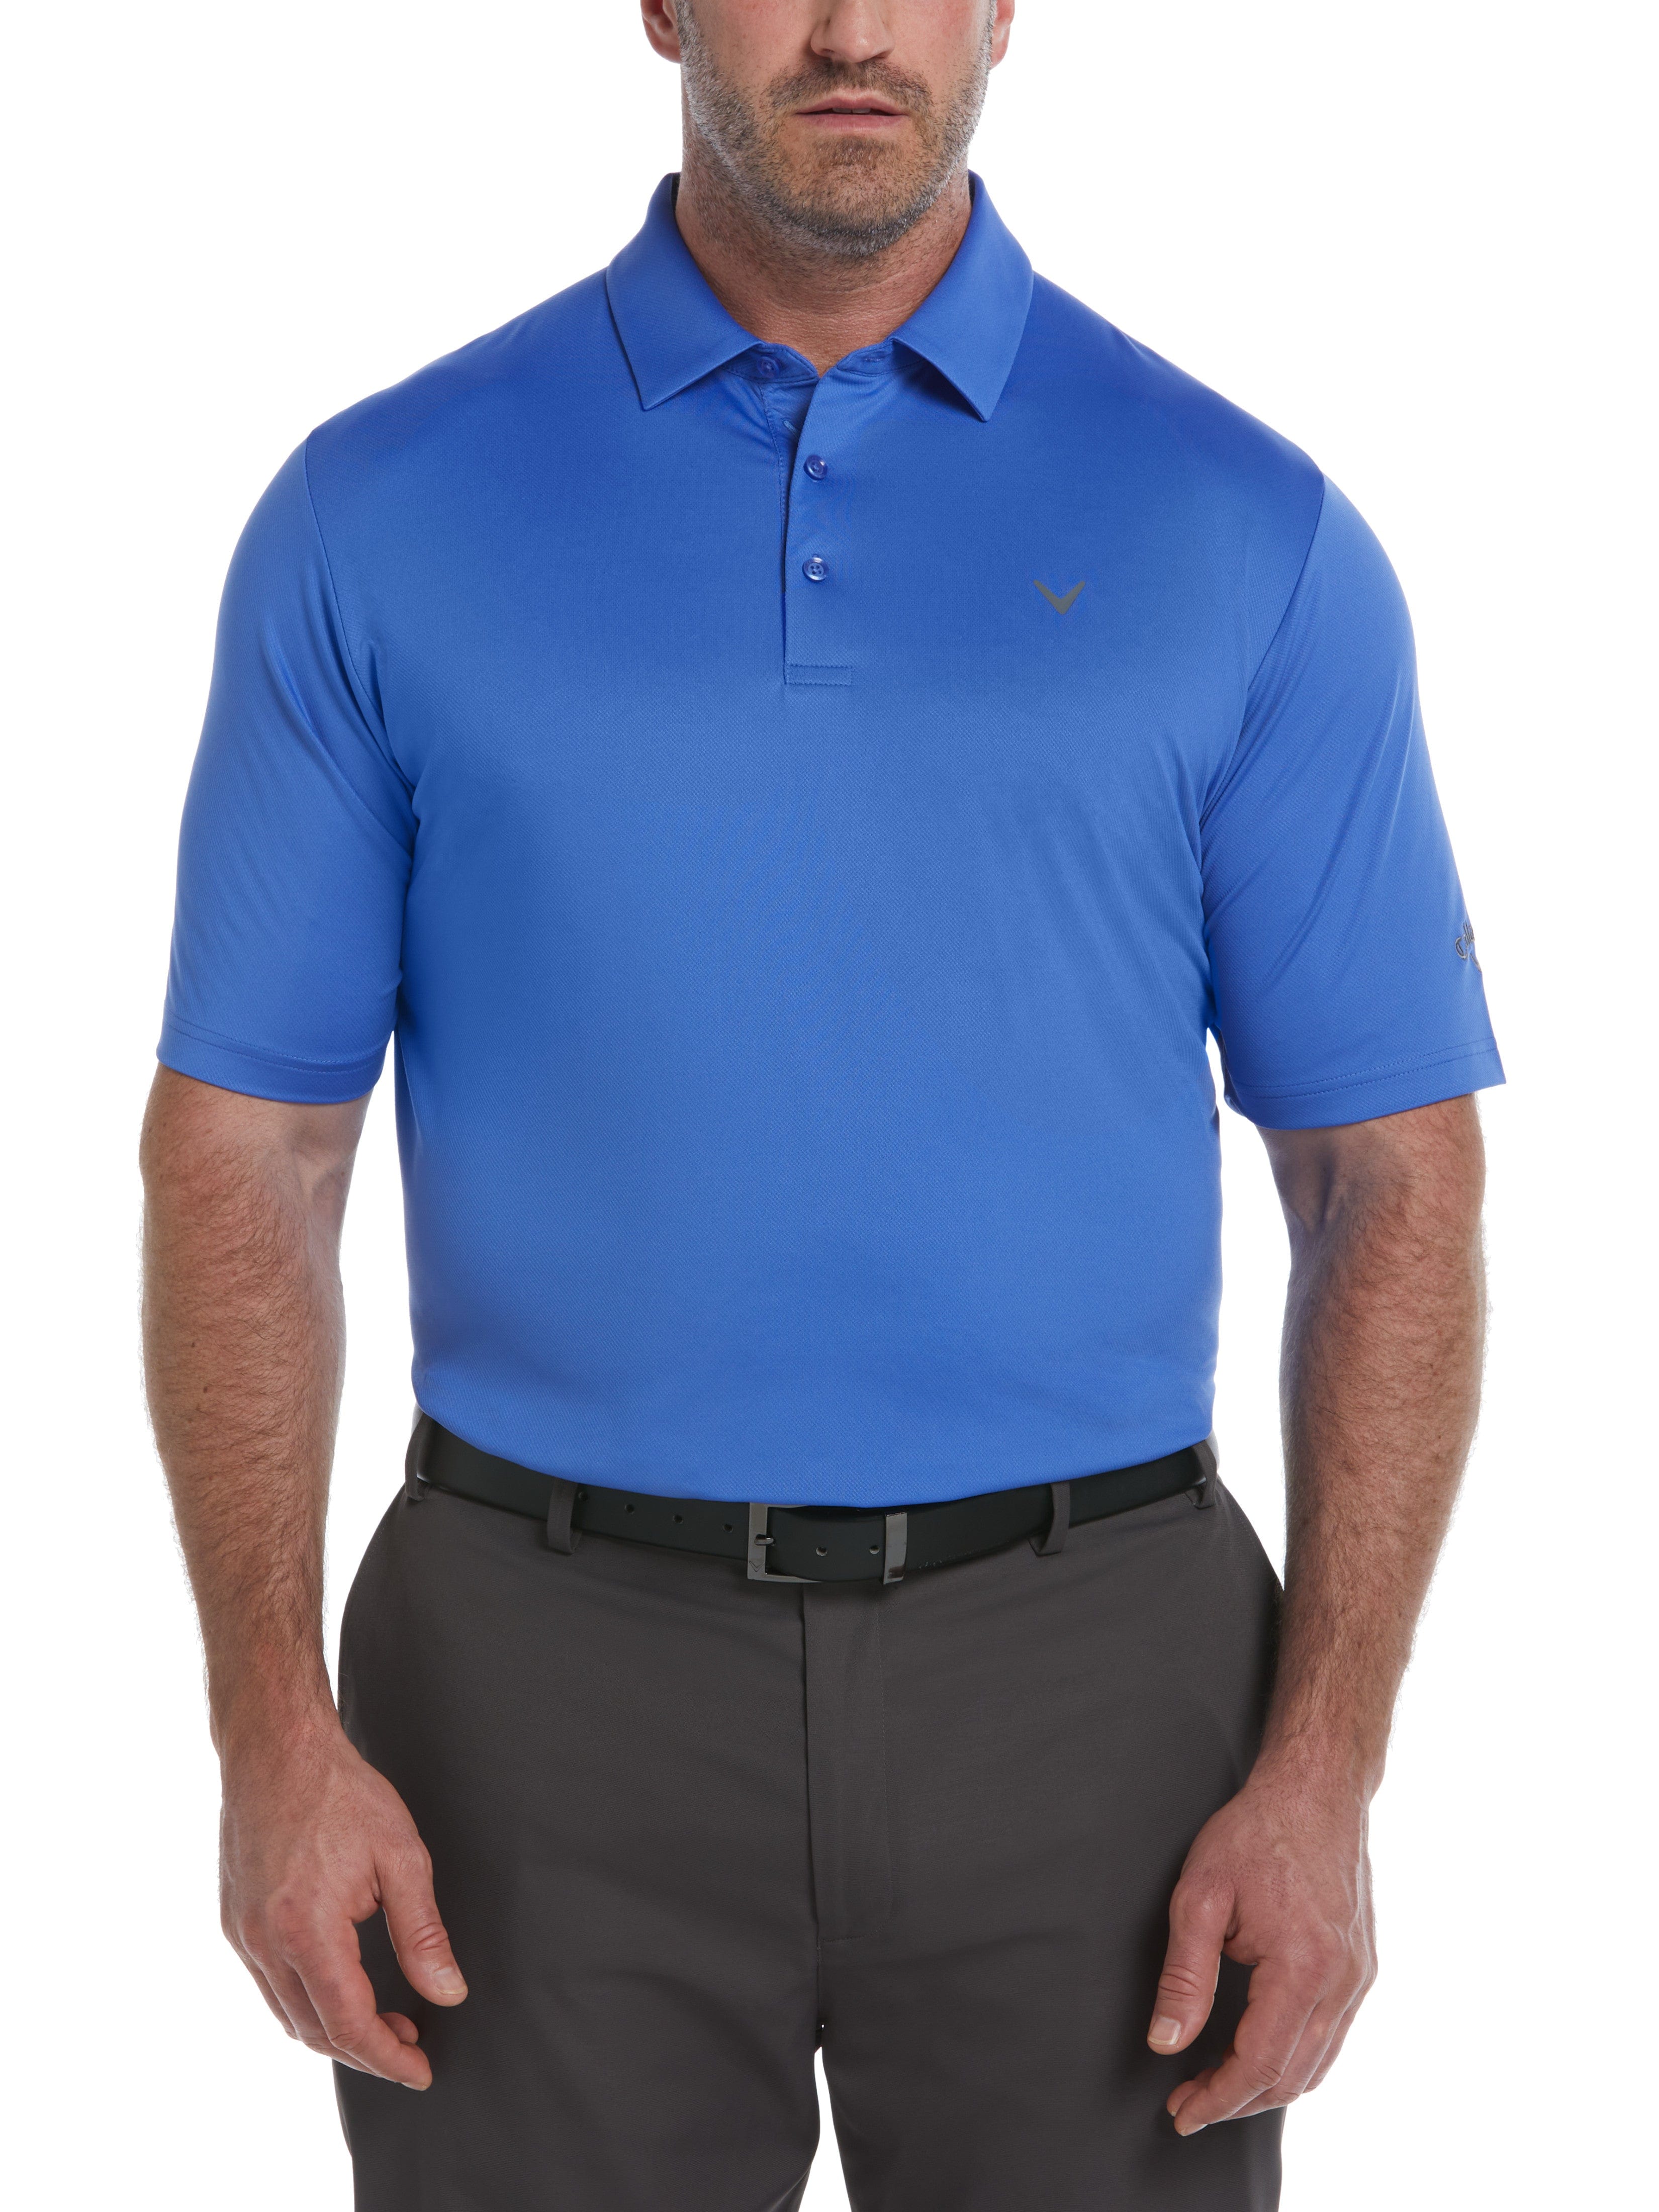 Callaway Apparel Mens Big & Tall Solid Swing Tech Golf Polo Shirt, Size 4X, Amparo Blue, Polyester/Elastane | Golf Apparel Shop